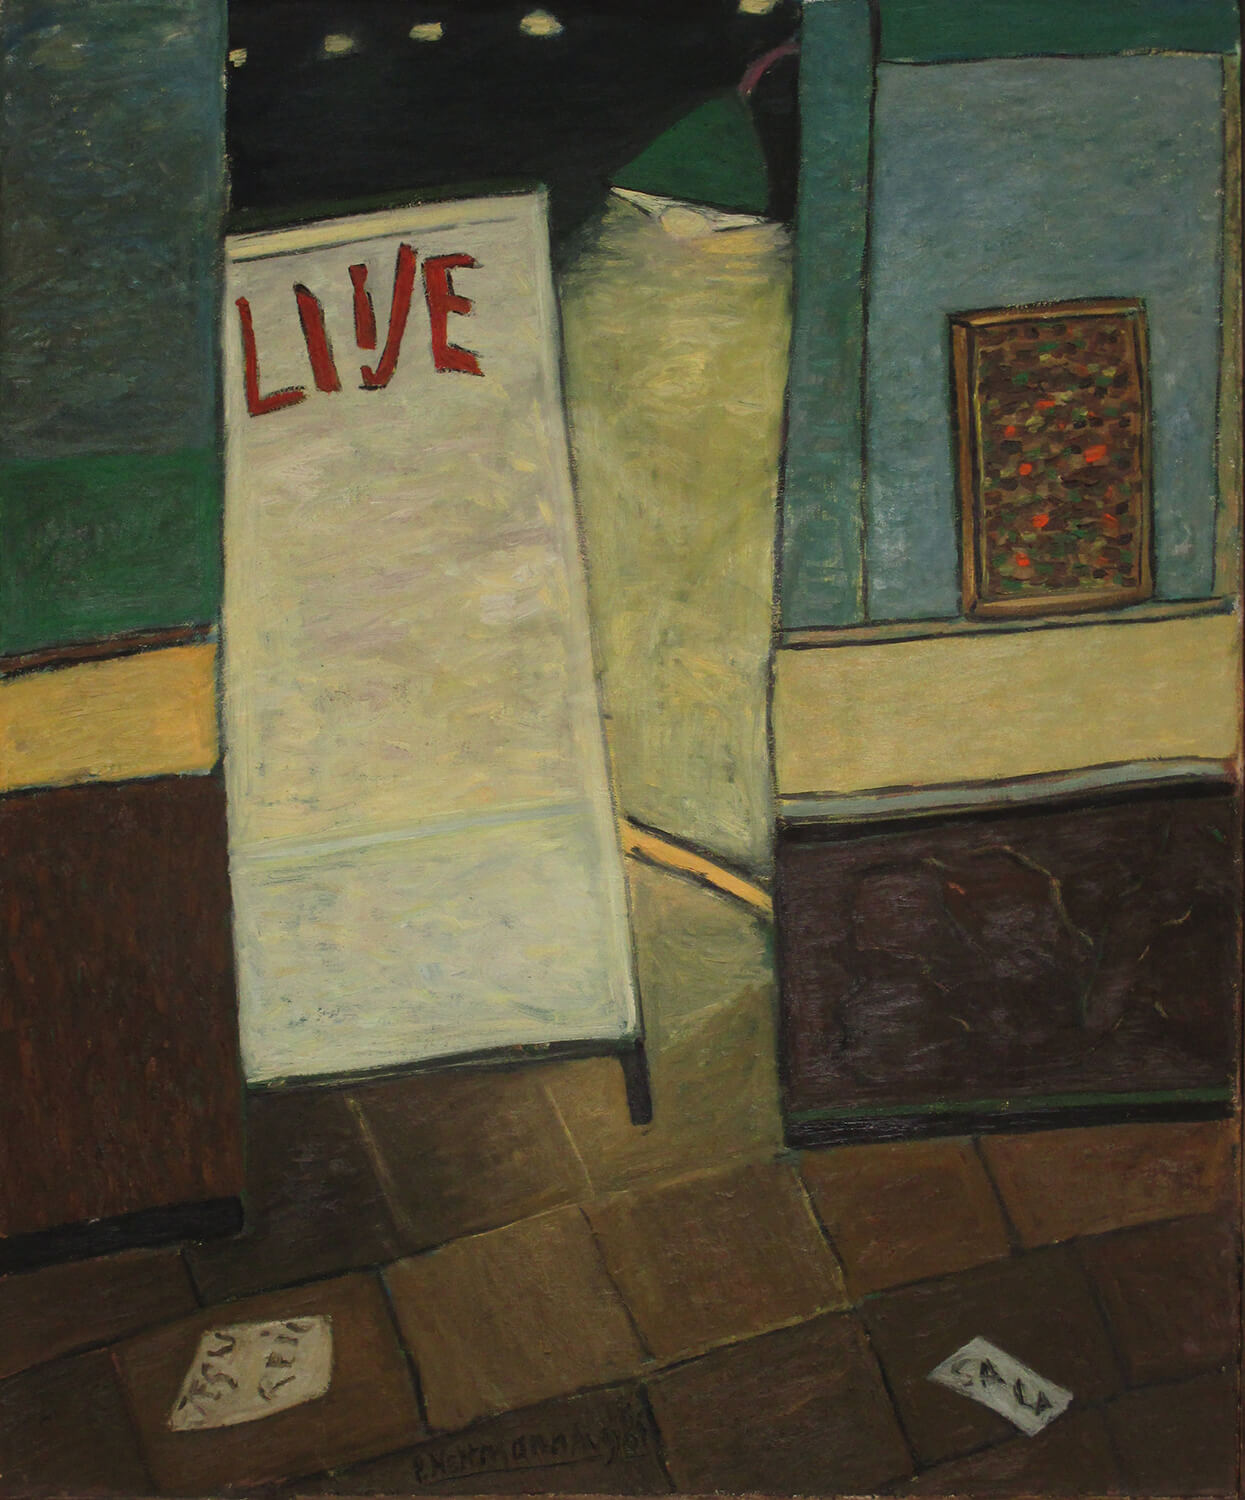 Peter Herrmann, LIVE (Entrance, Hamburg), 1984, oil on canvas, 115 x 95 cm